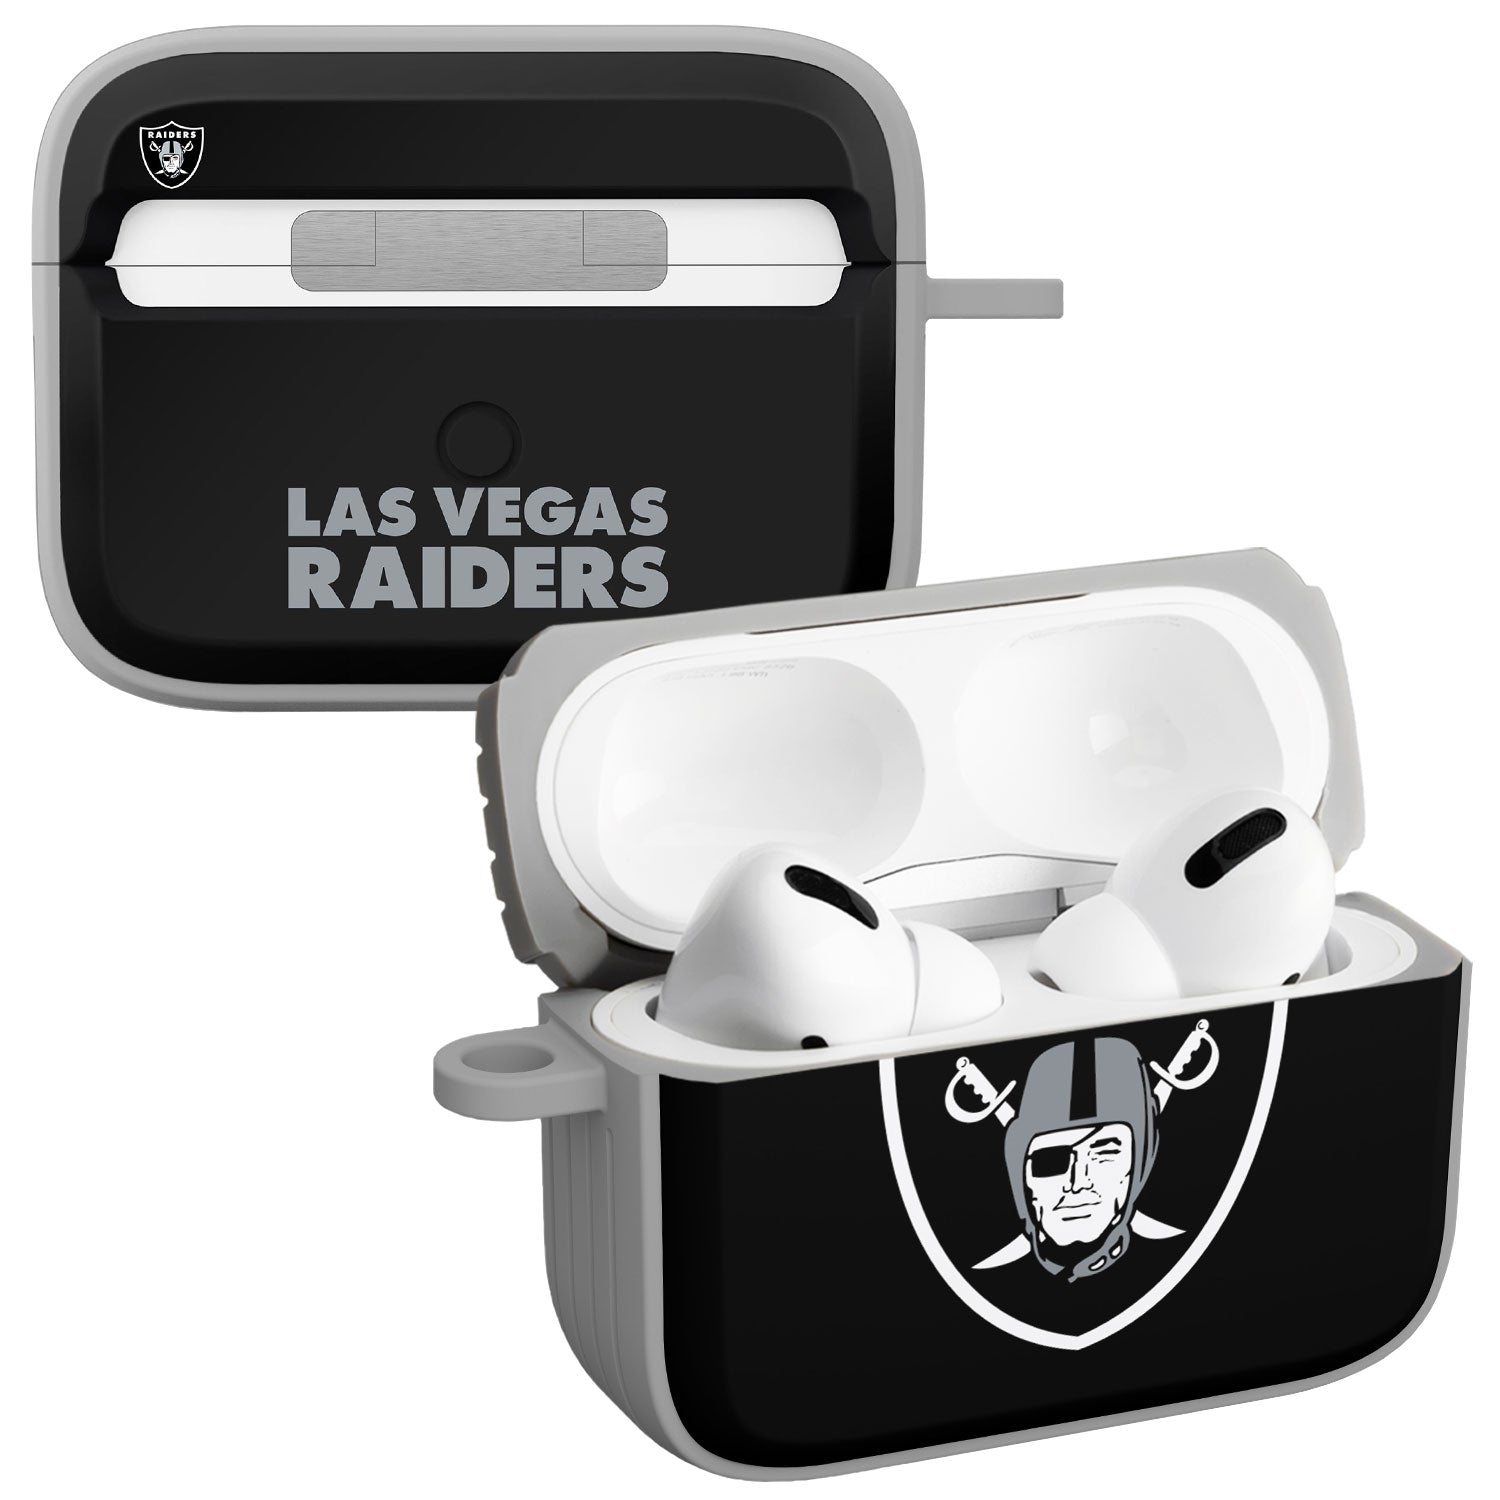 Las Vegas Raiders HDX Apple AirPods Pro Case Cover